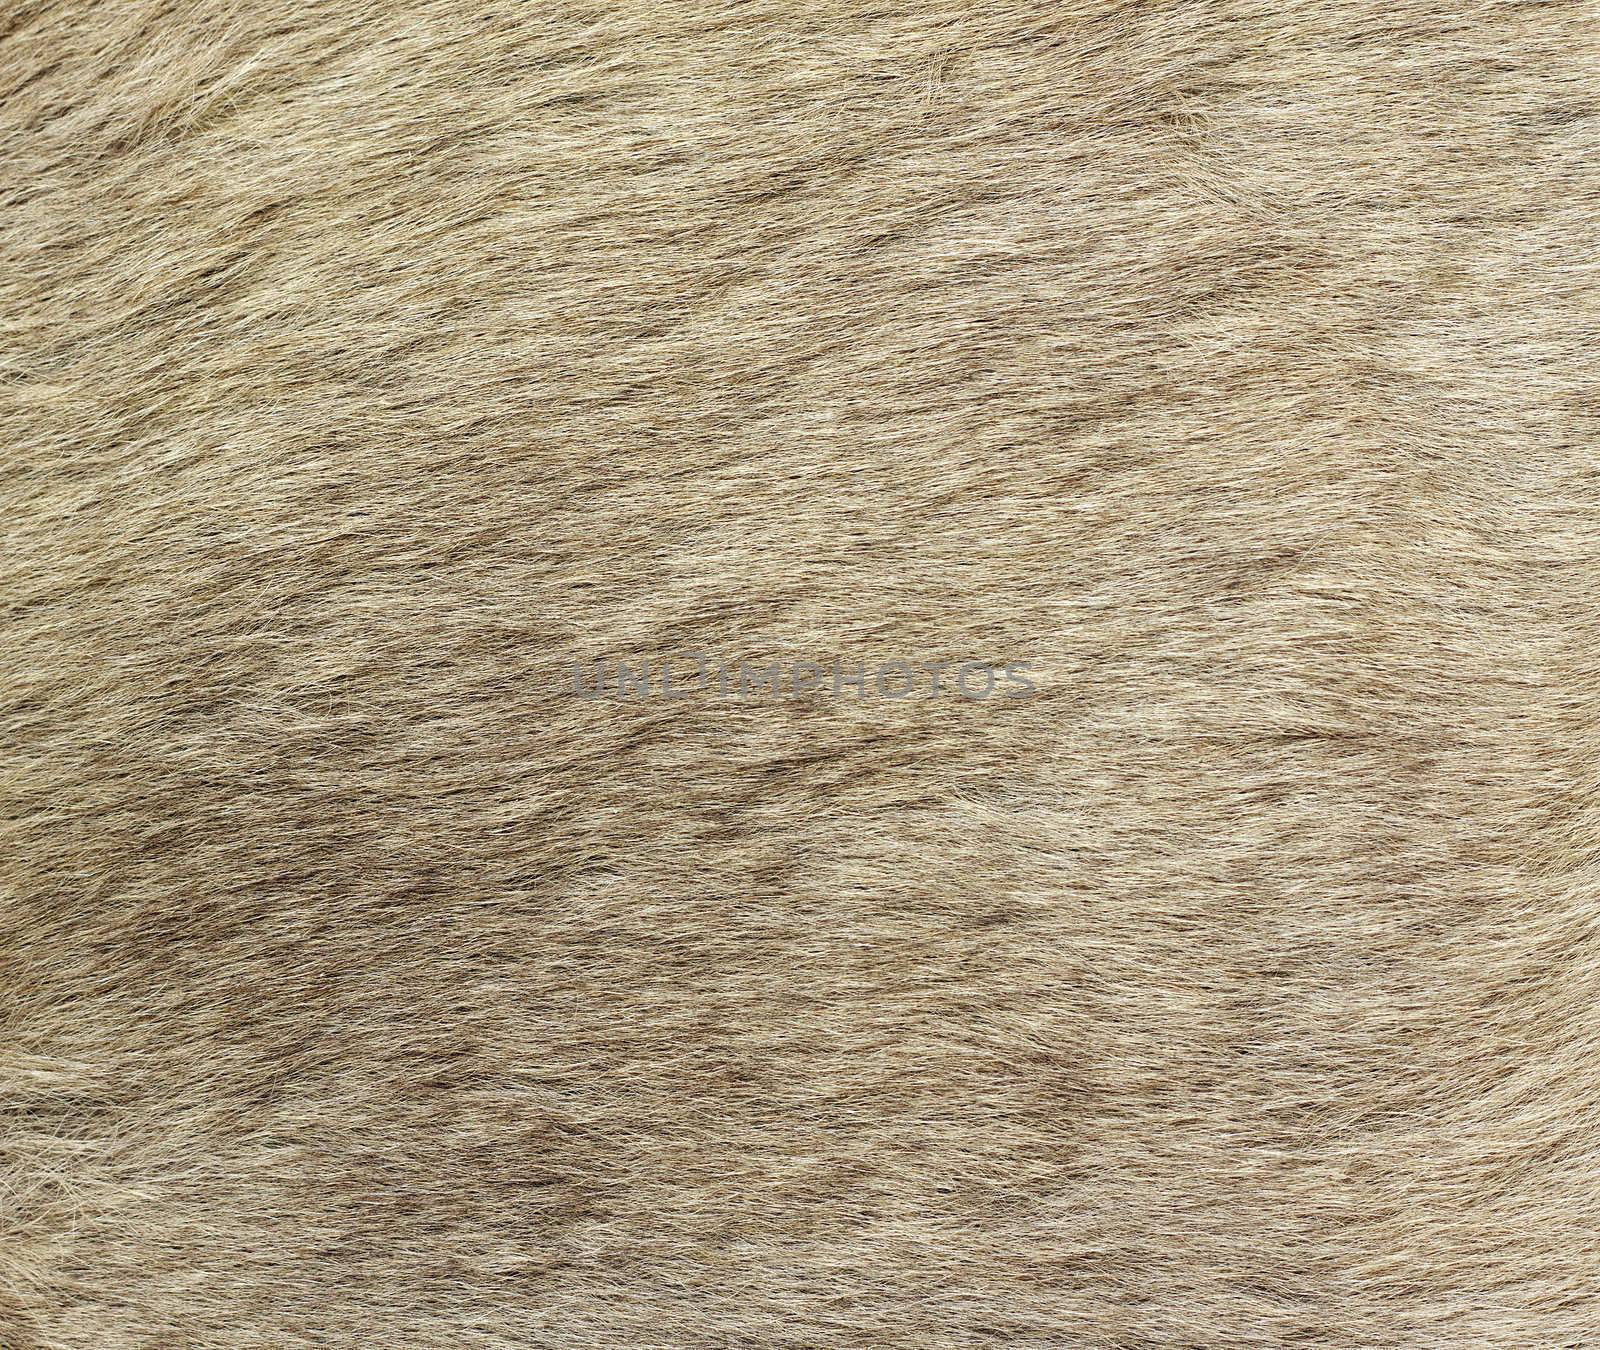 Closeup of the fur of a Kangaroo by Jaykayl